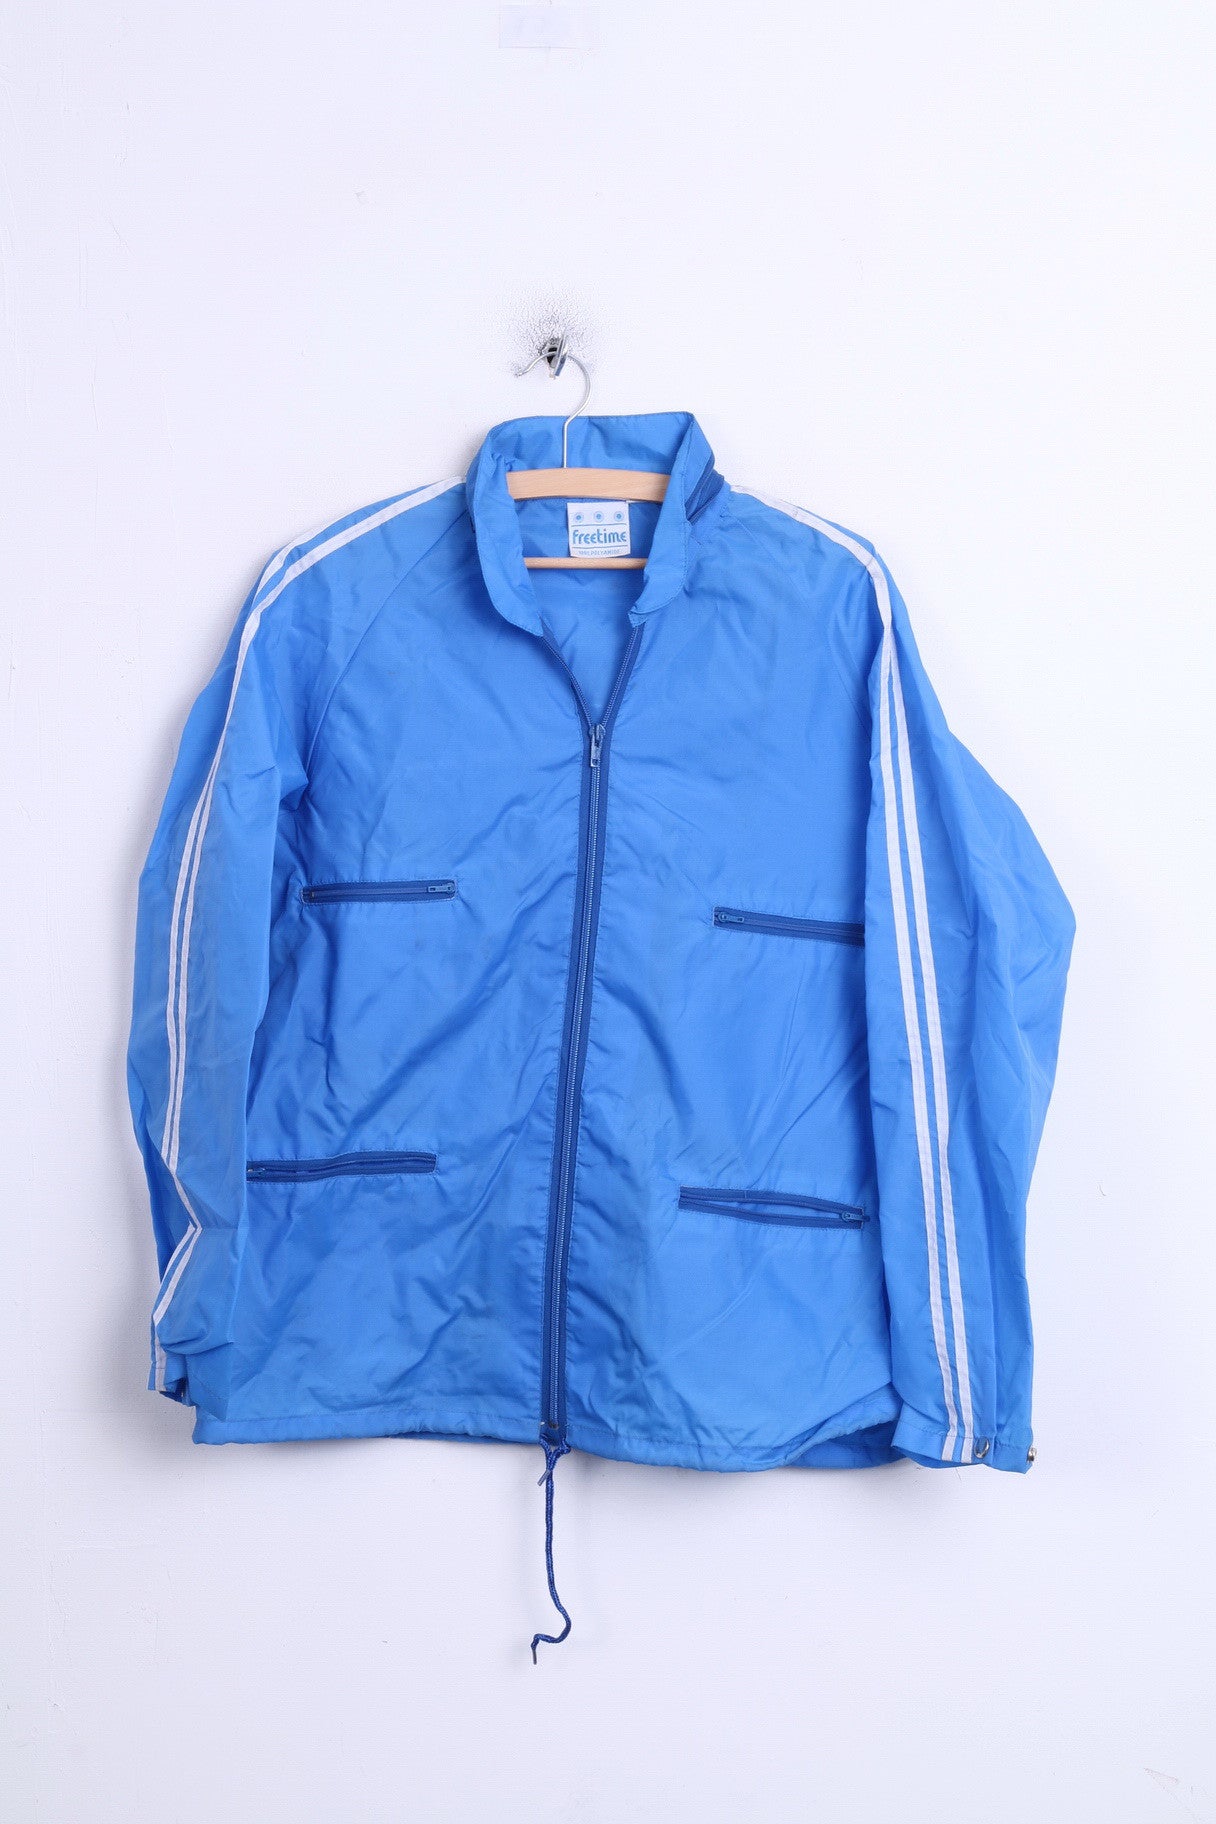 Freetime Mens 48 M Jacket Blue Nylon Waterproof Hood - RetrospectClothes